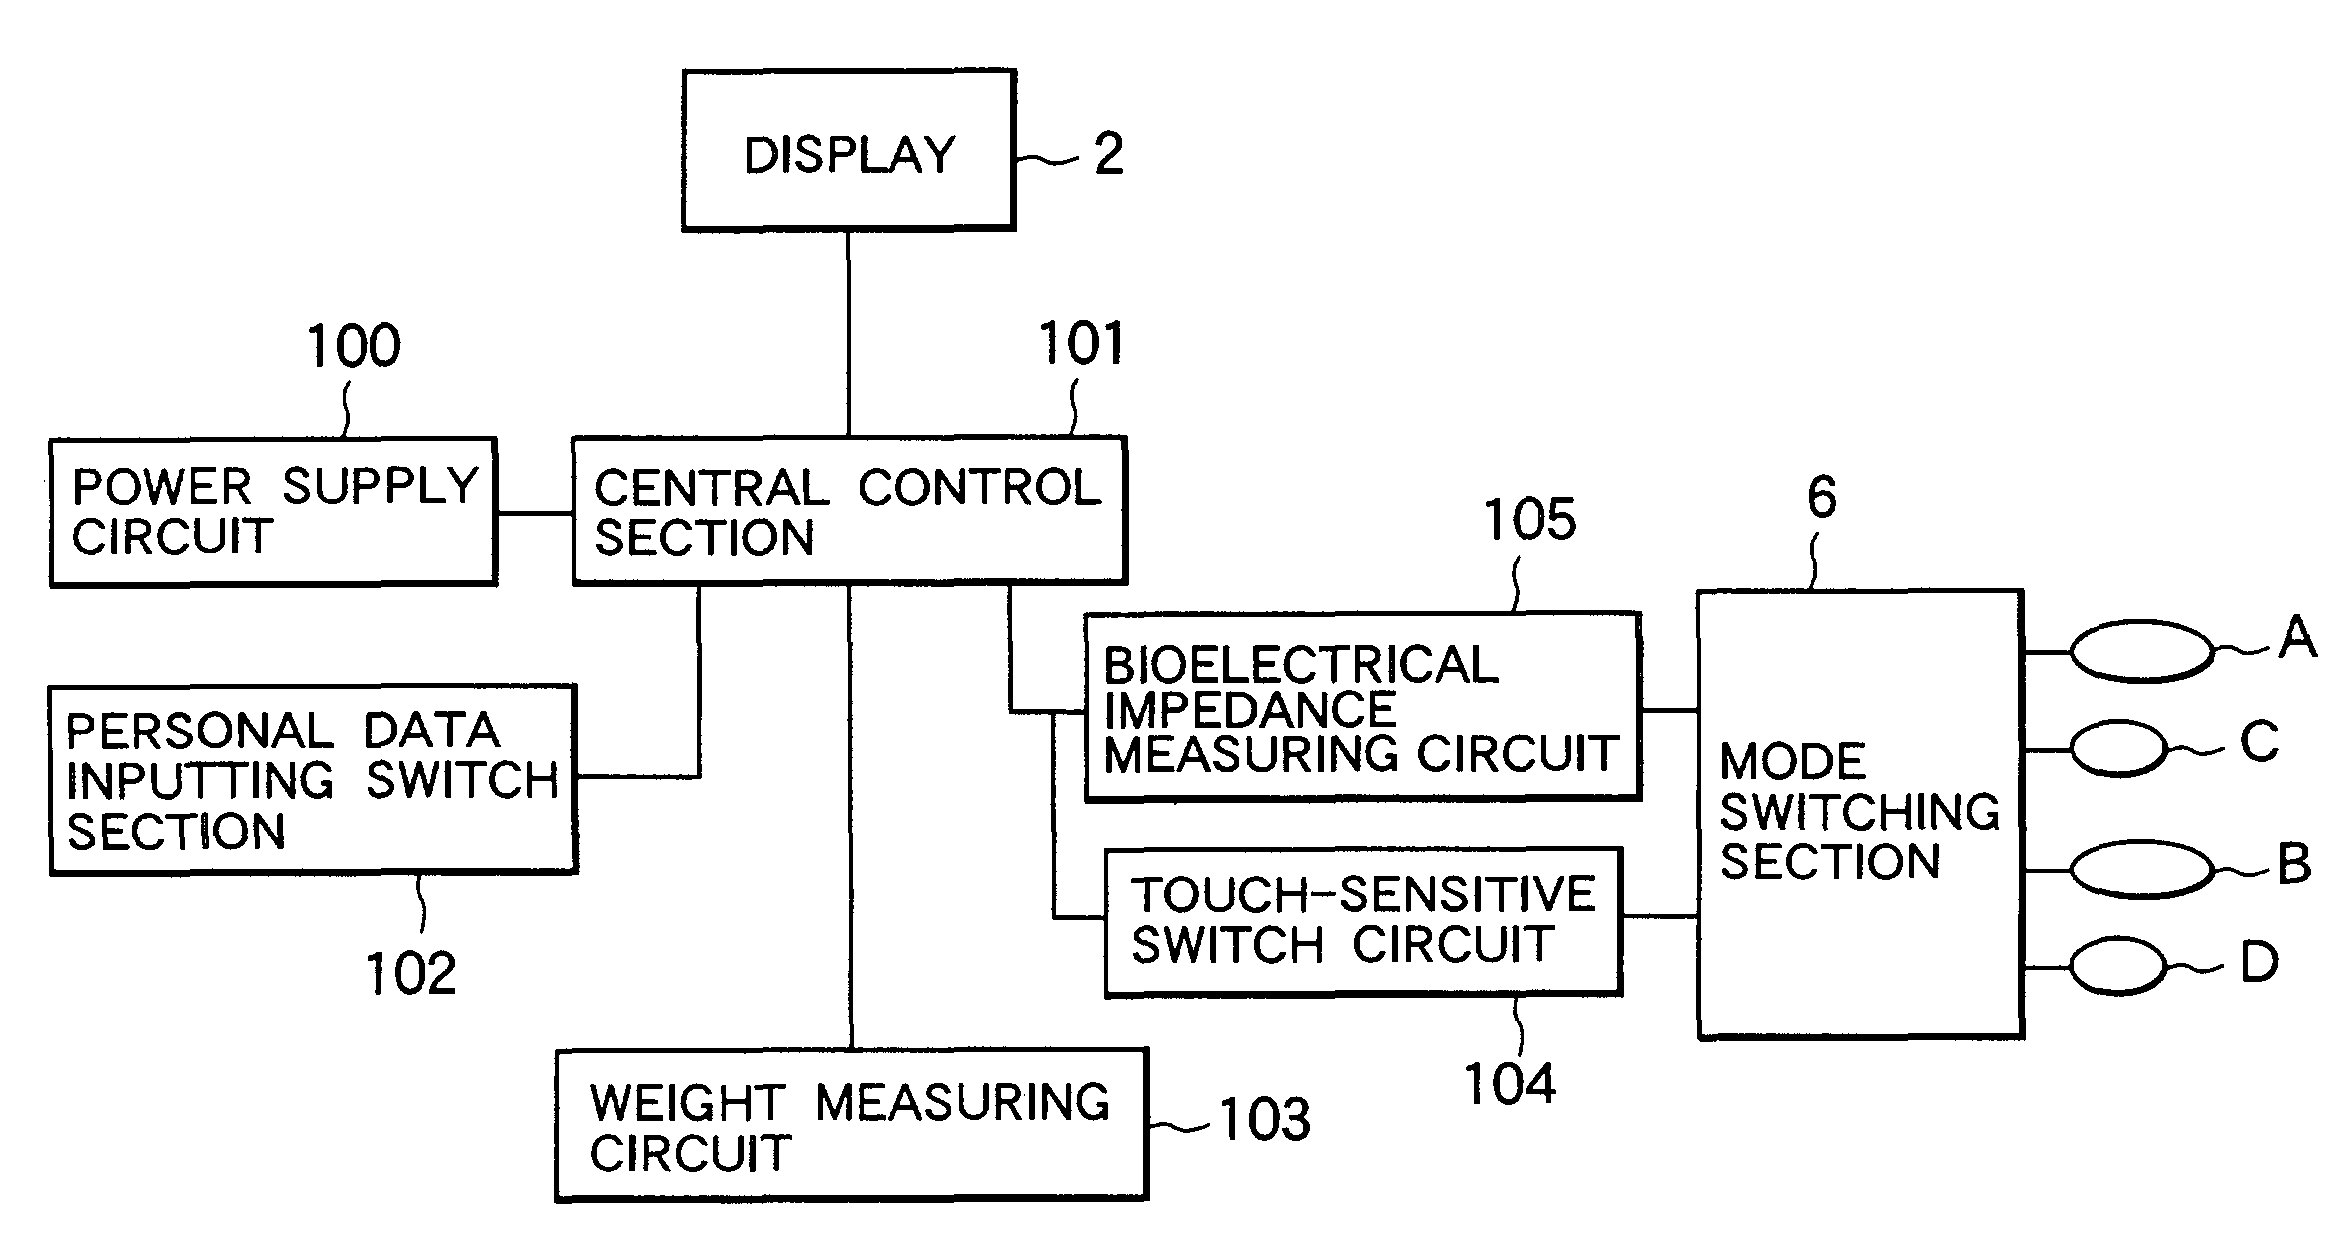 Bioelectrical impedance measuring apparatus